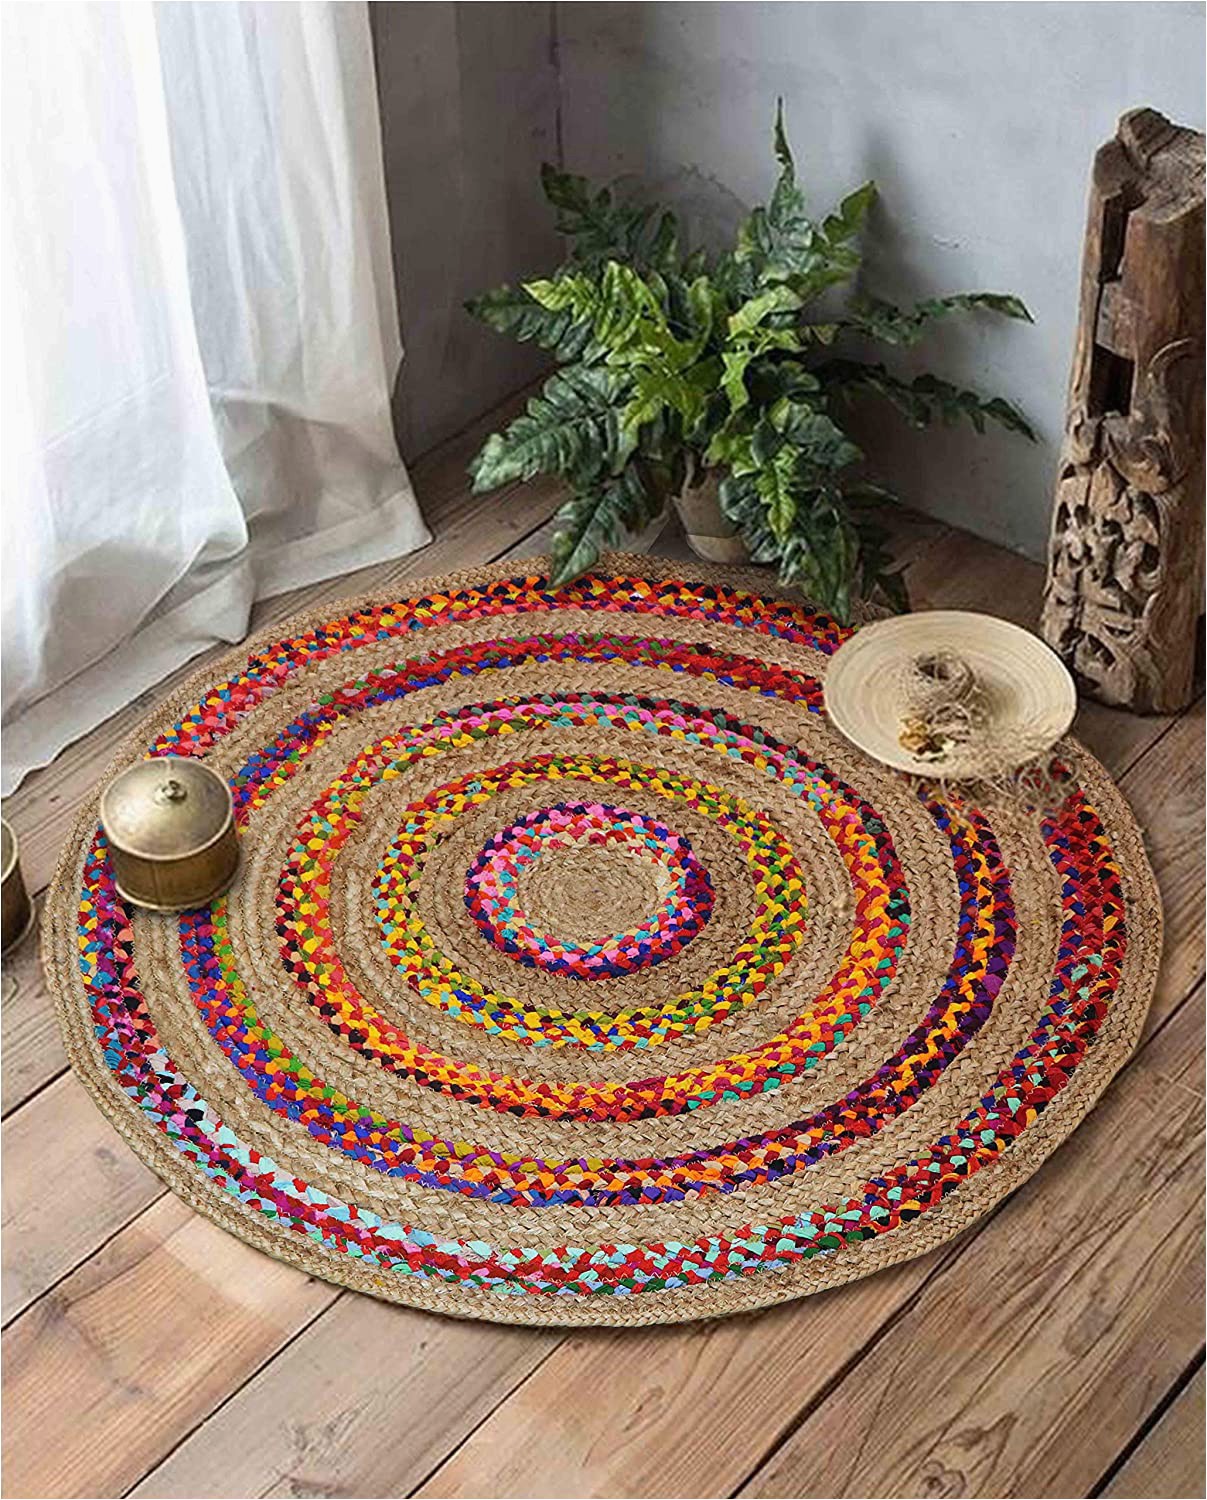 copy of bohemian living room round area rug carpet 5 x 5 feet on sale